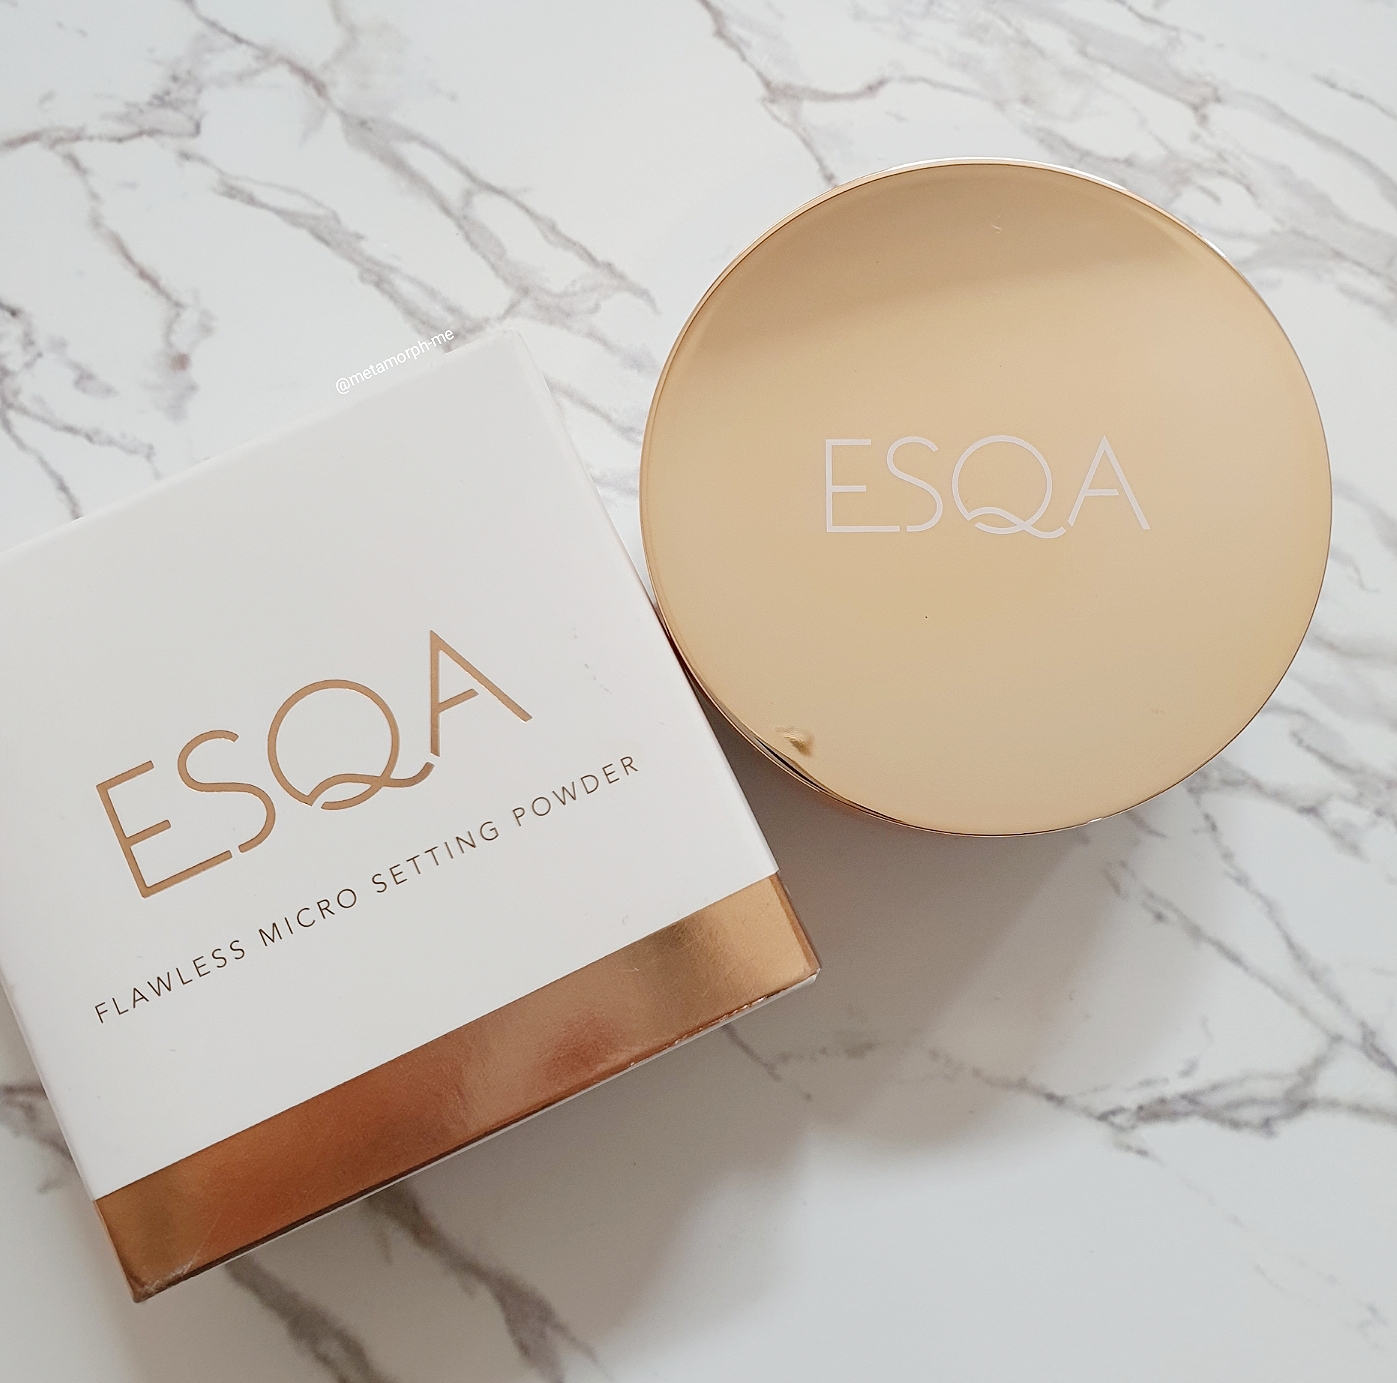 ESQA Flawless Micro Setting Powder